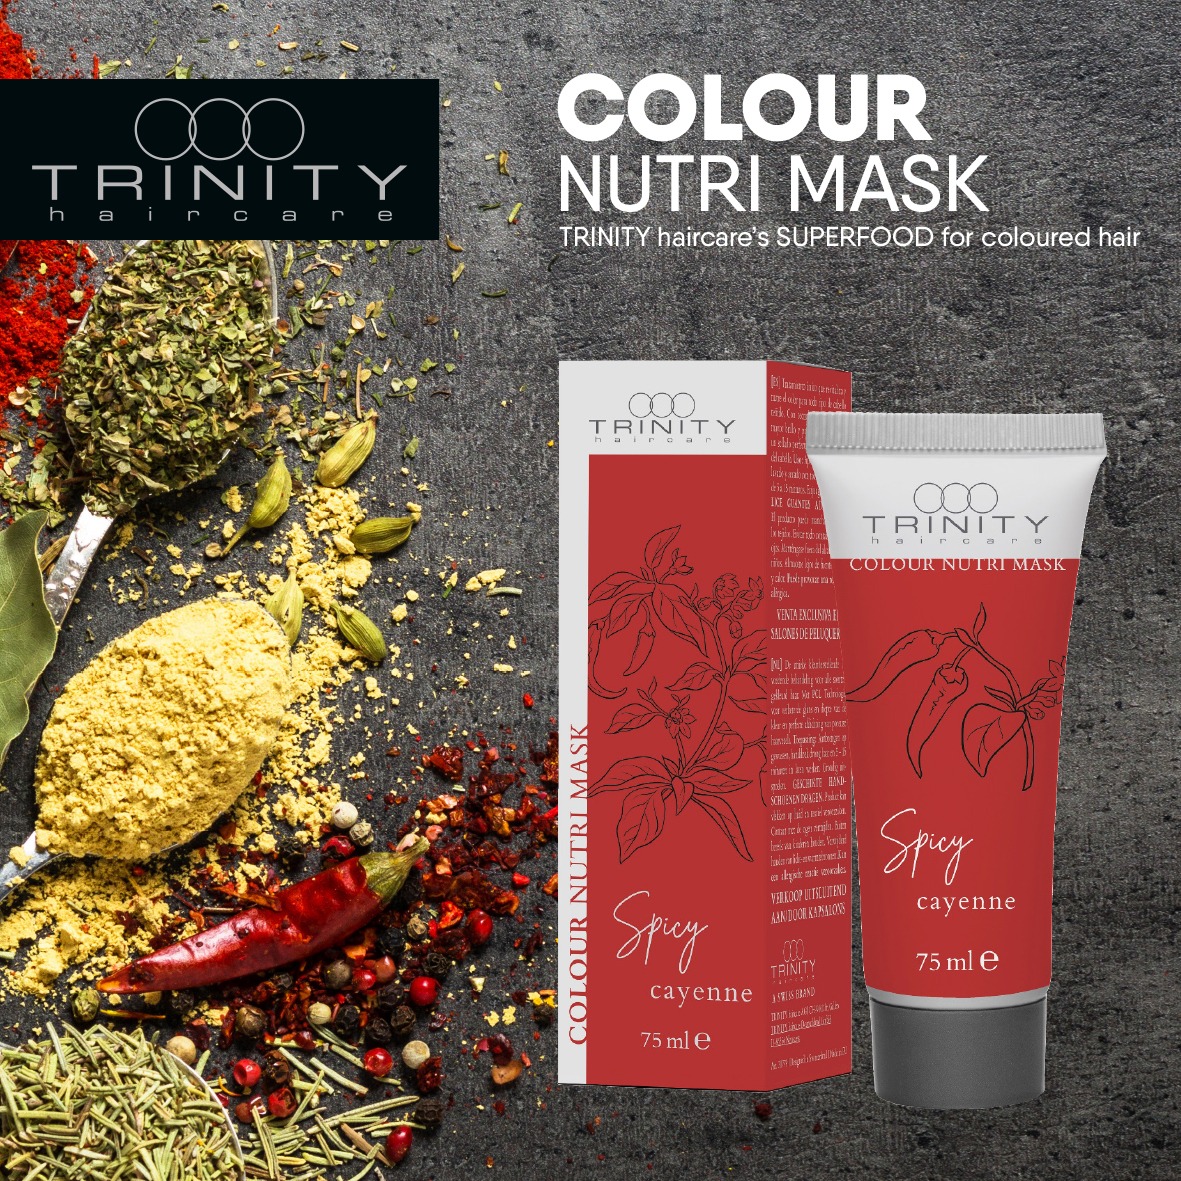 Colour nutri mask, 𝐂𝐎𝐋𝐎𝐔𝐑 𝐍𝐔𝐓𝐑𝐈 𝐌𝐀𝐒𝐊 &#8211; TRINITY haircareʼs 𝙎𝙐𝙋𝙀𝙍𝙁𝙊𝙊𝘿 voor gekleurd haar!